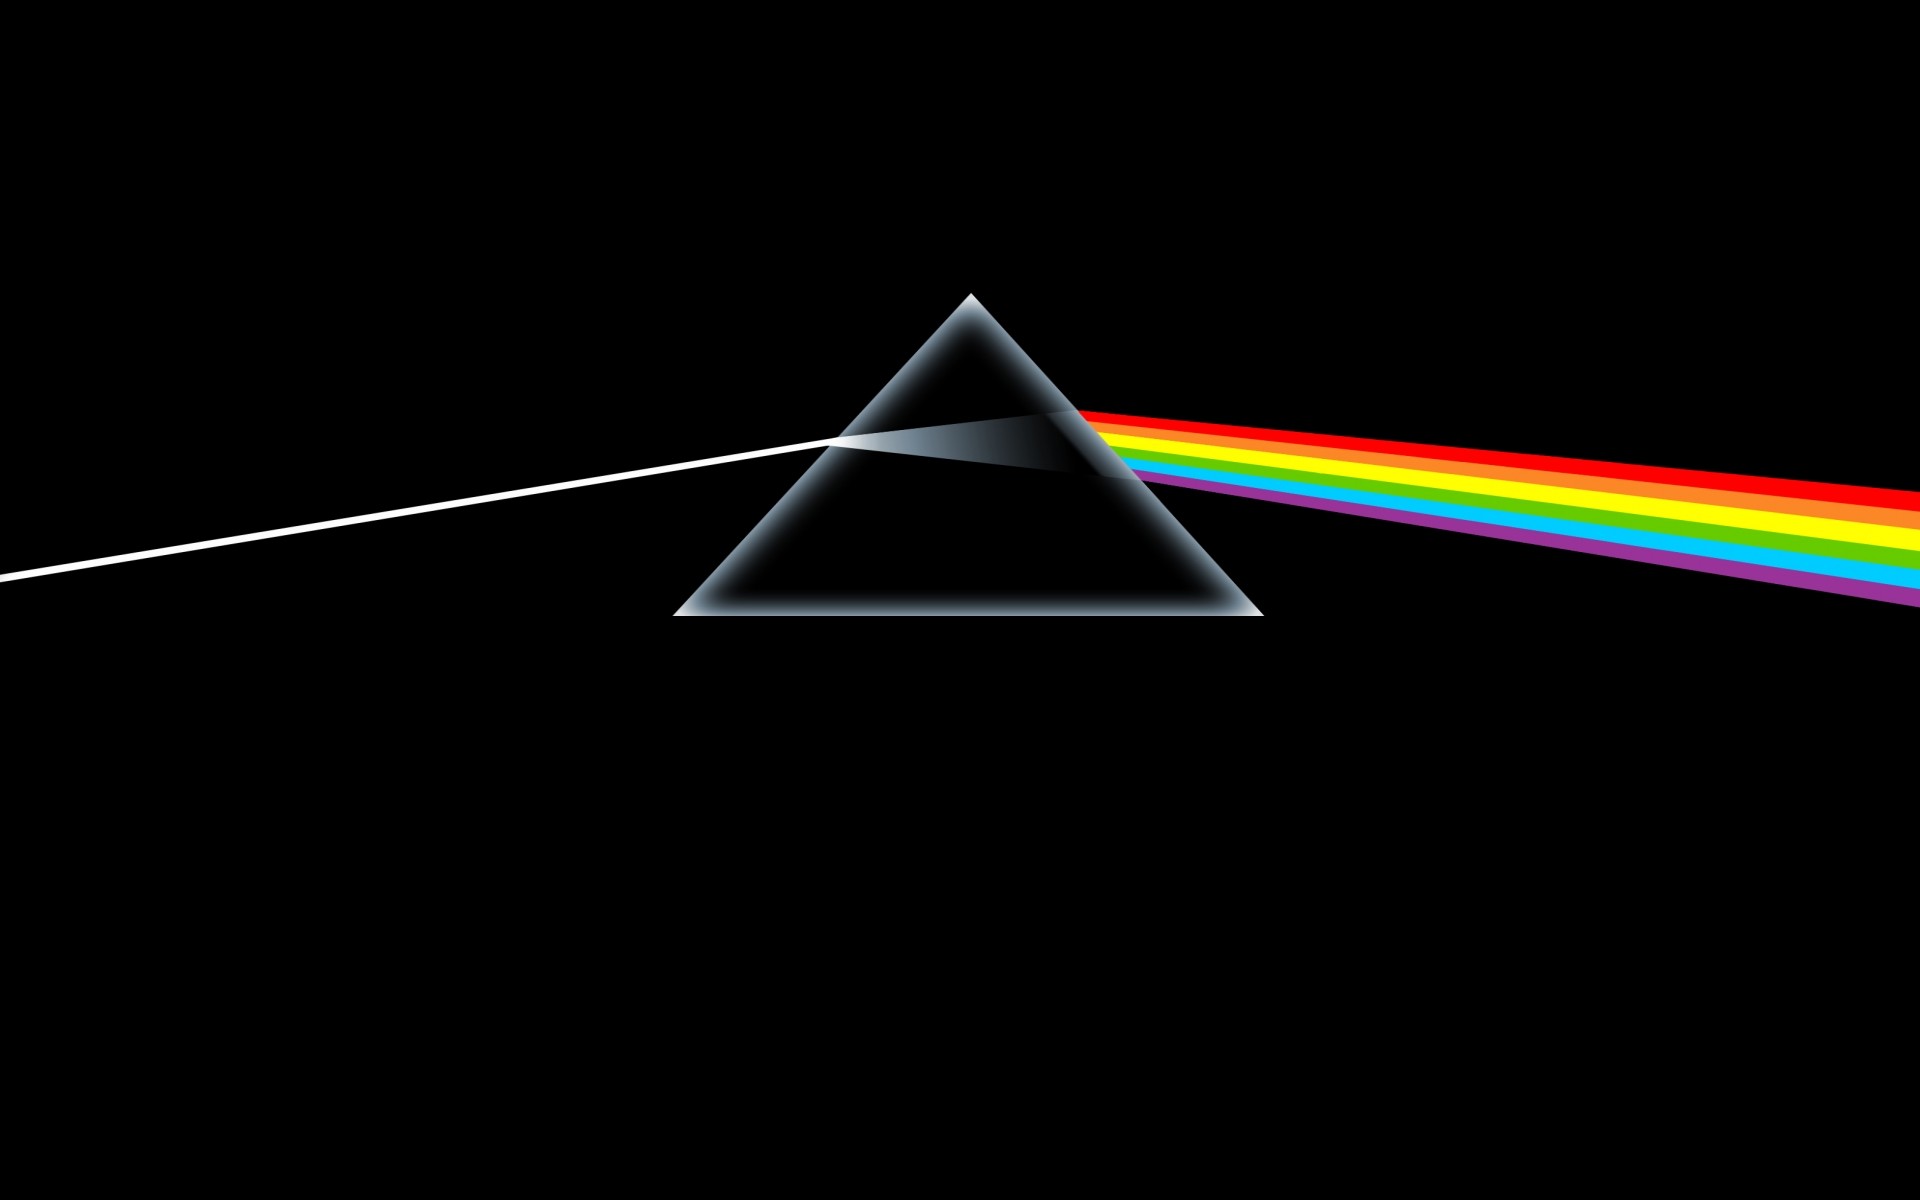 1920x1200 Pink Floyd hard rock classic retro bands groups album covers logo wallpaper  |  | 26110 | WallpaperUP